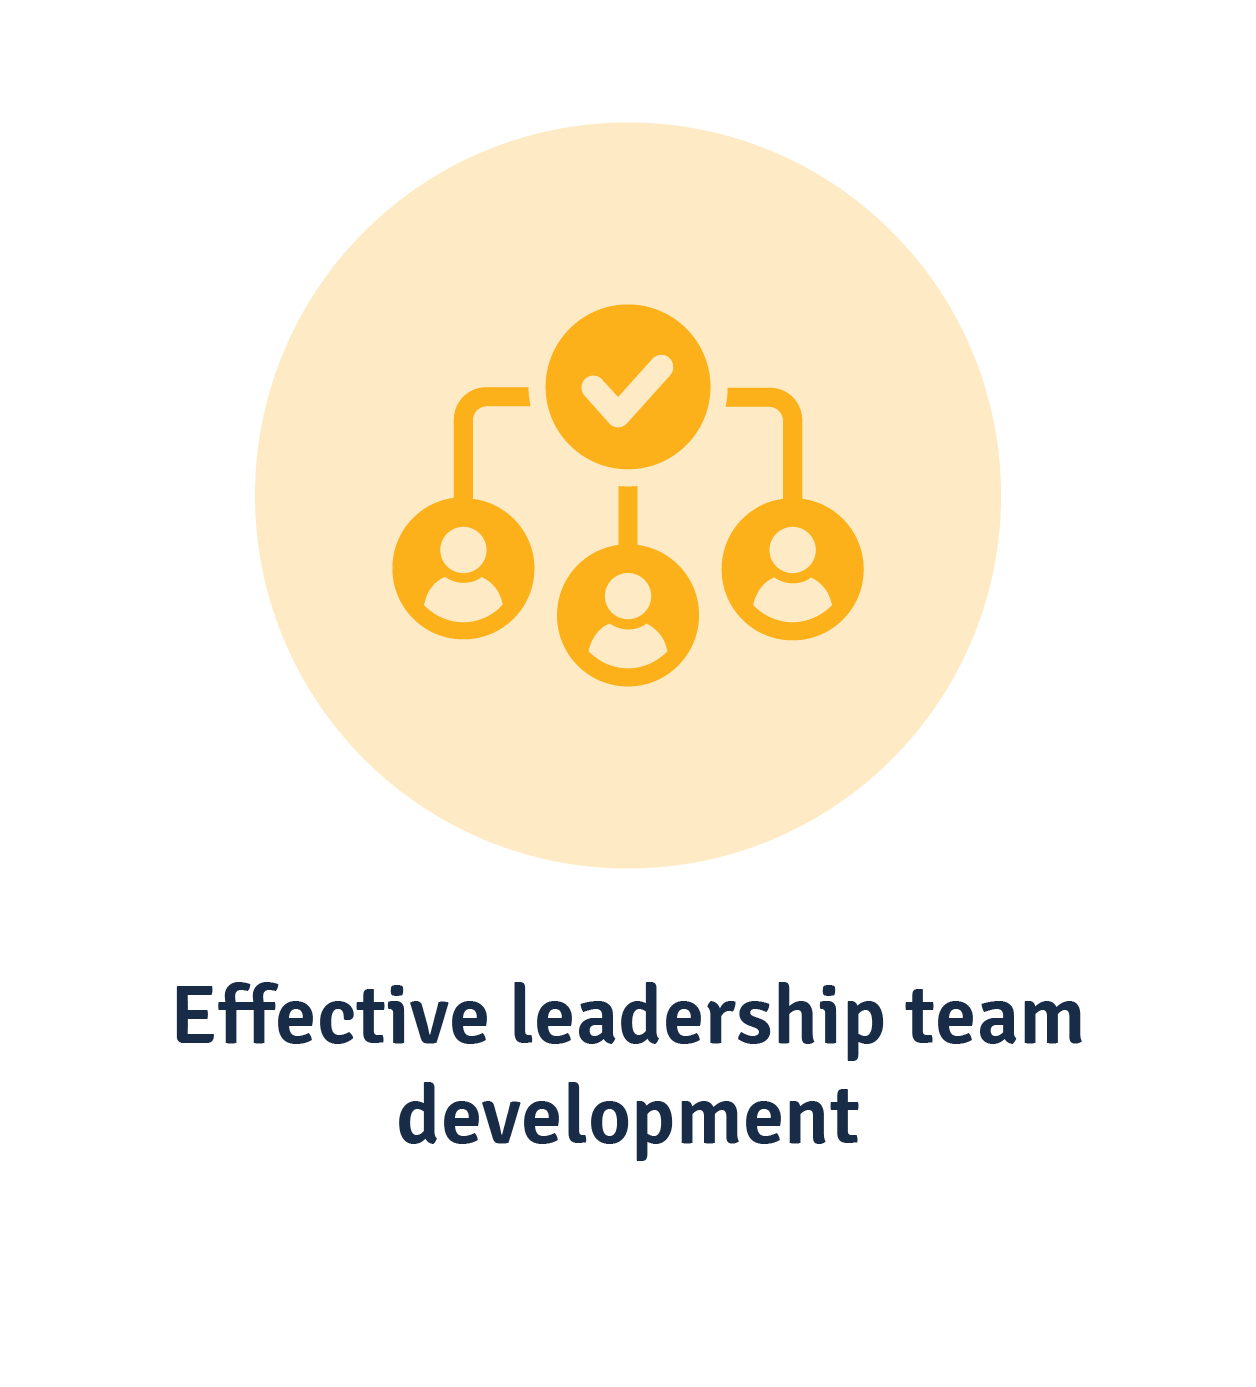 Effective leadership team development